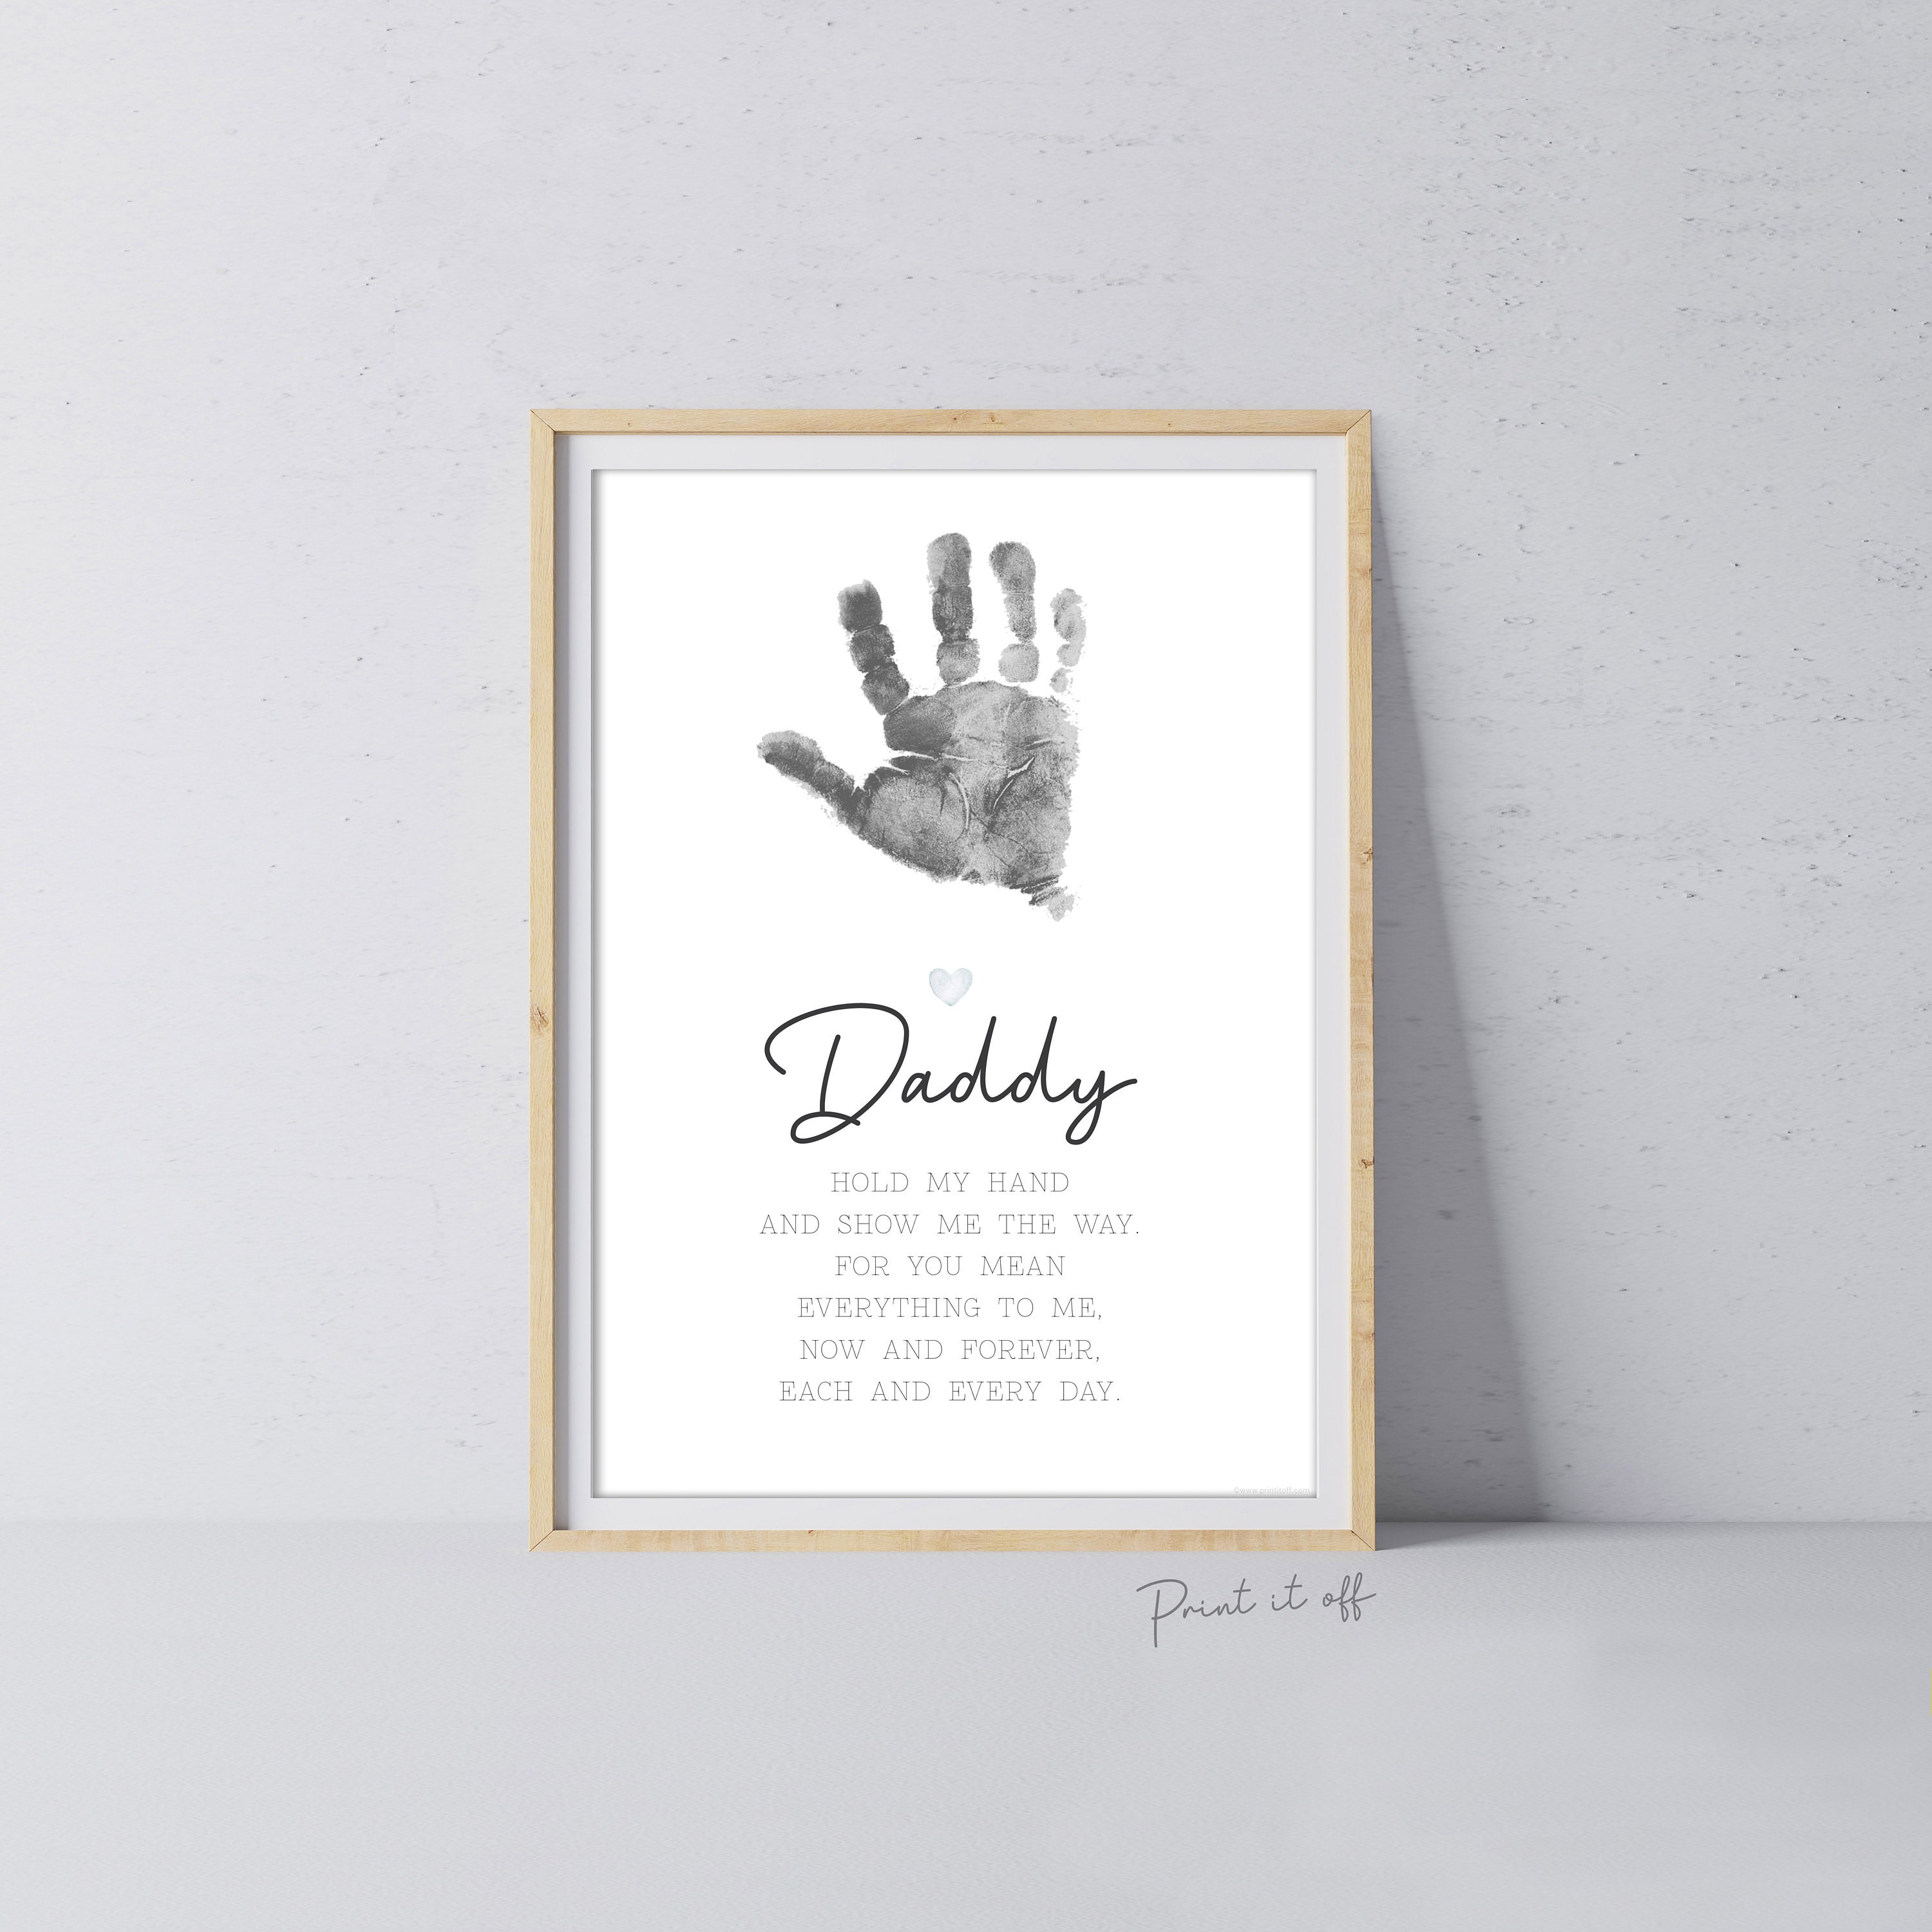 Daddy Handprint Poem / Hand Art Craft Dad Father's Day Birthday / Kids Baby  Toddler / Activity Keepsake Gift Card Sign / PRINT IT OFF 0450 